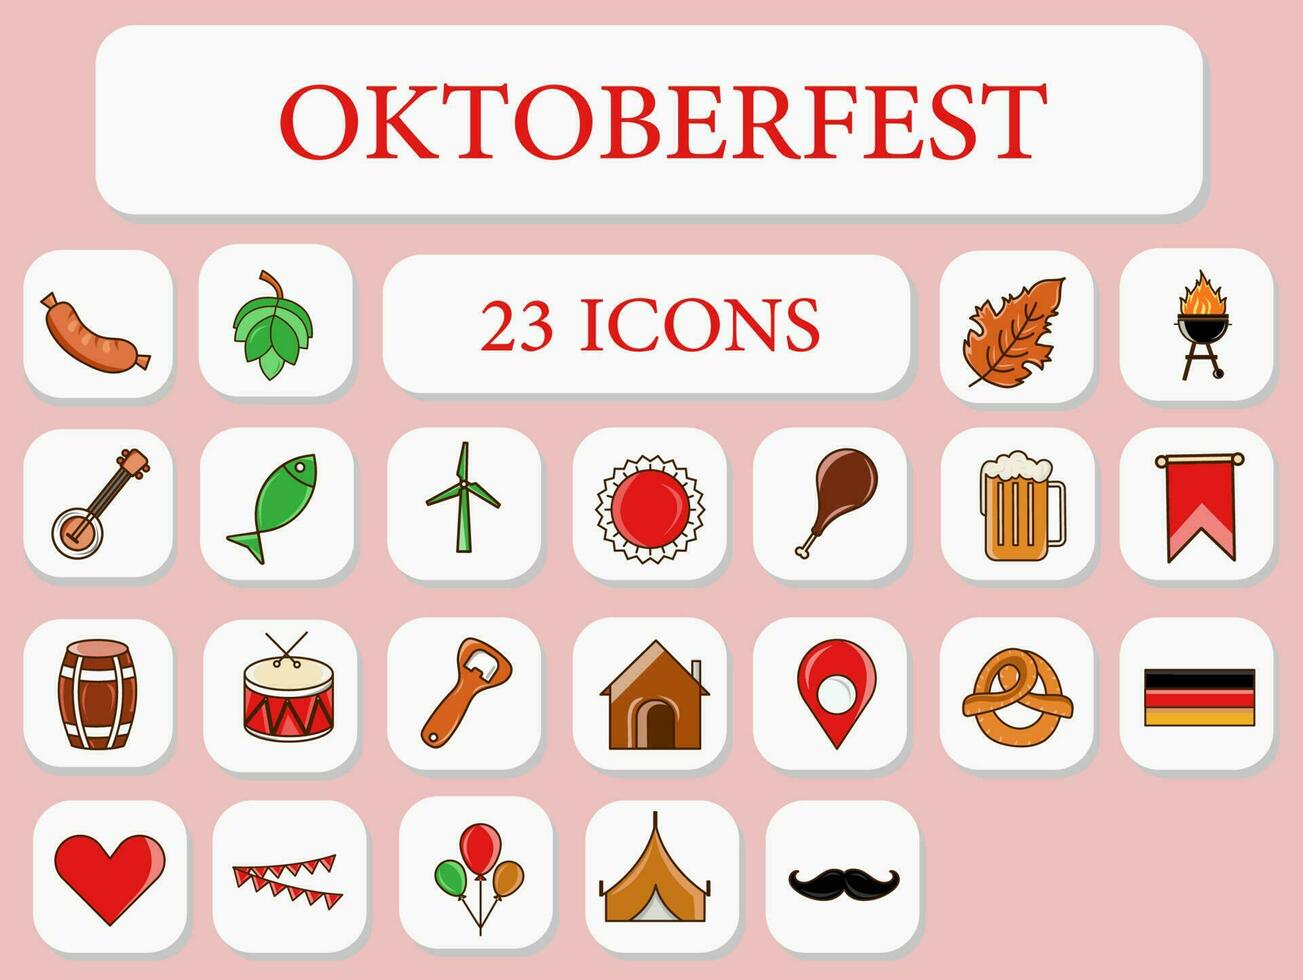 plano estilo Oktoberfest celebracion icono conjunto terminado cuadrado rosado antecedentes. vector